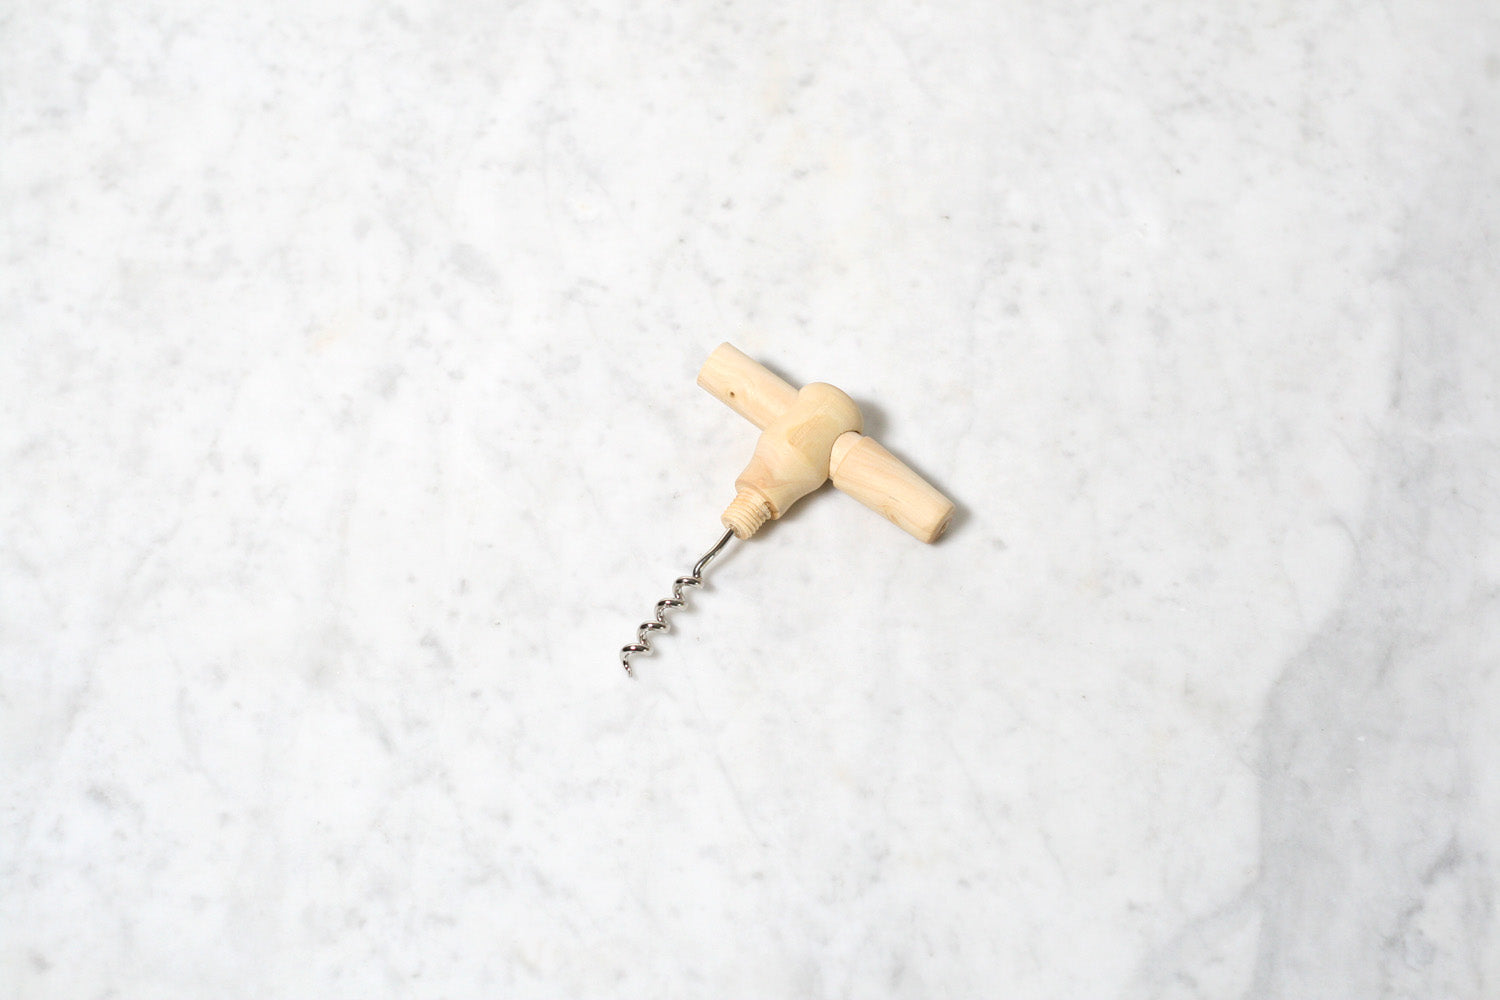 French Pocket Corkscrew